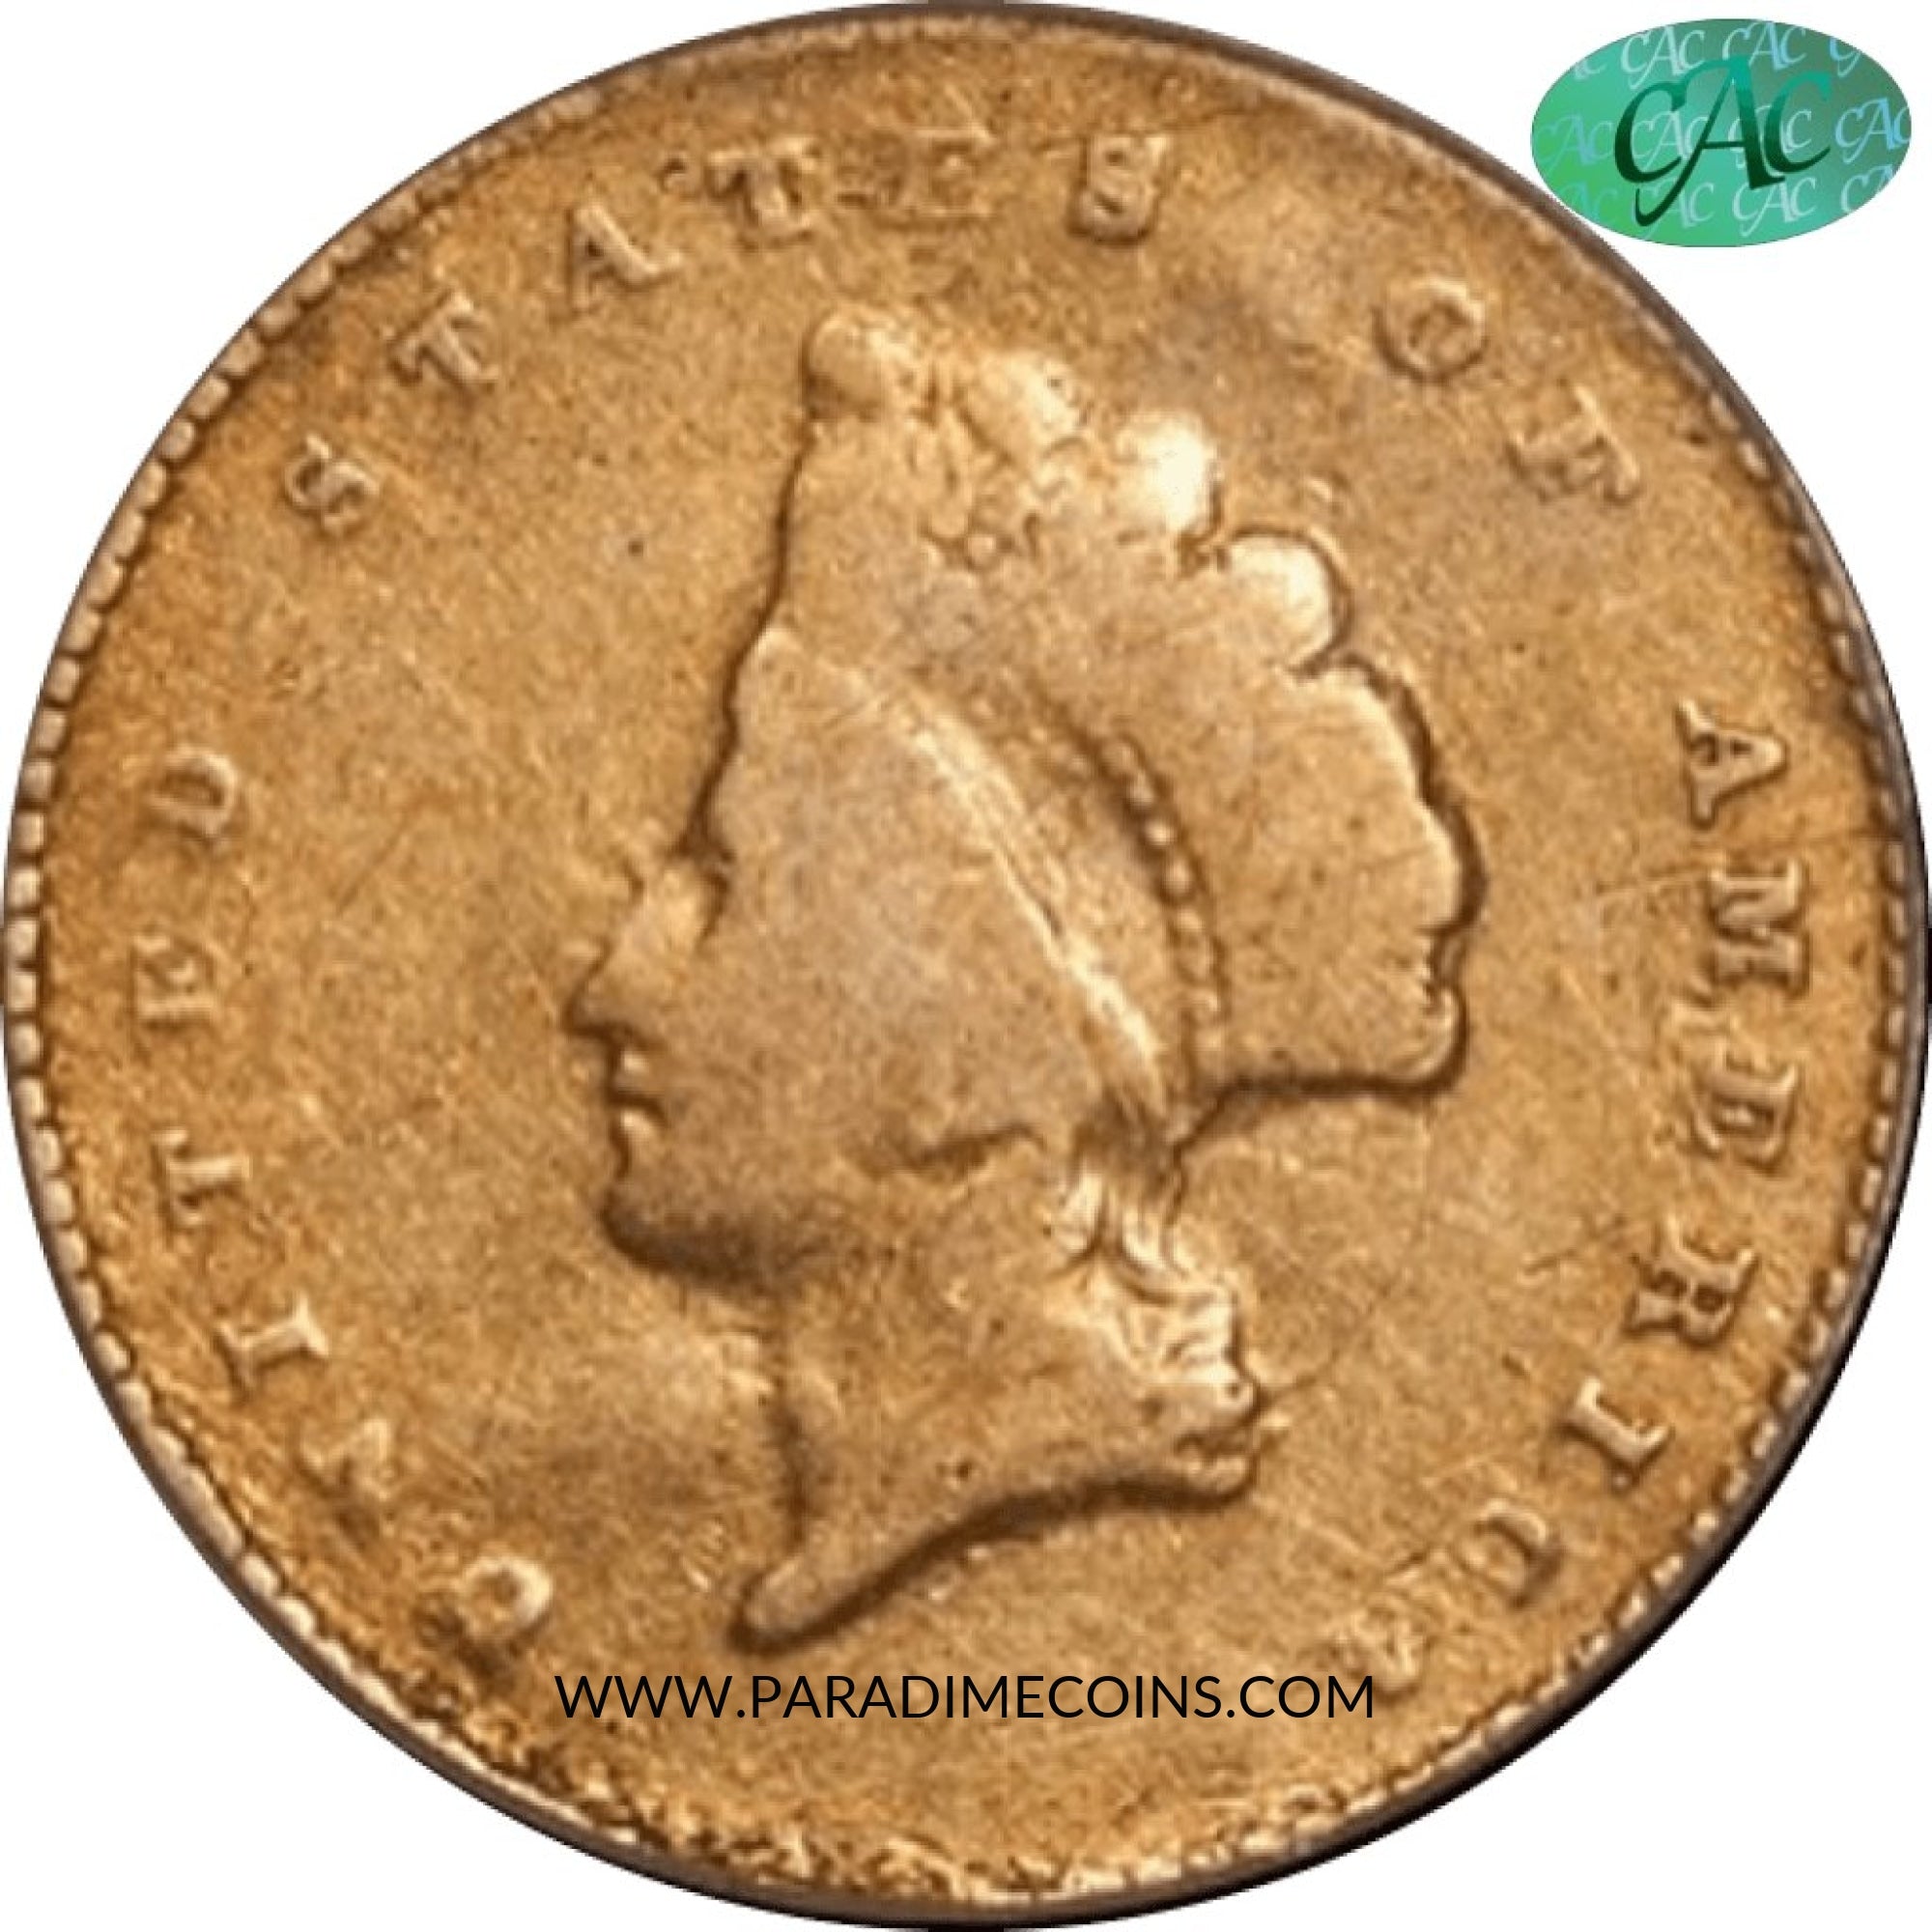 1855-S G$1 F15 PCGS CAC - Paradime Coins | PCGS NGC CACG CAC Rare US Numismatic Coins For Sale